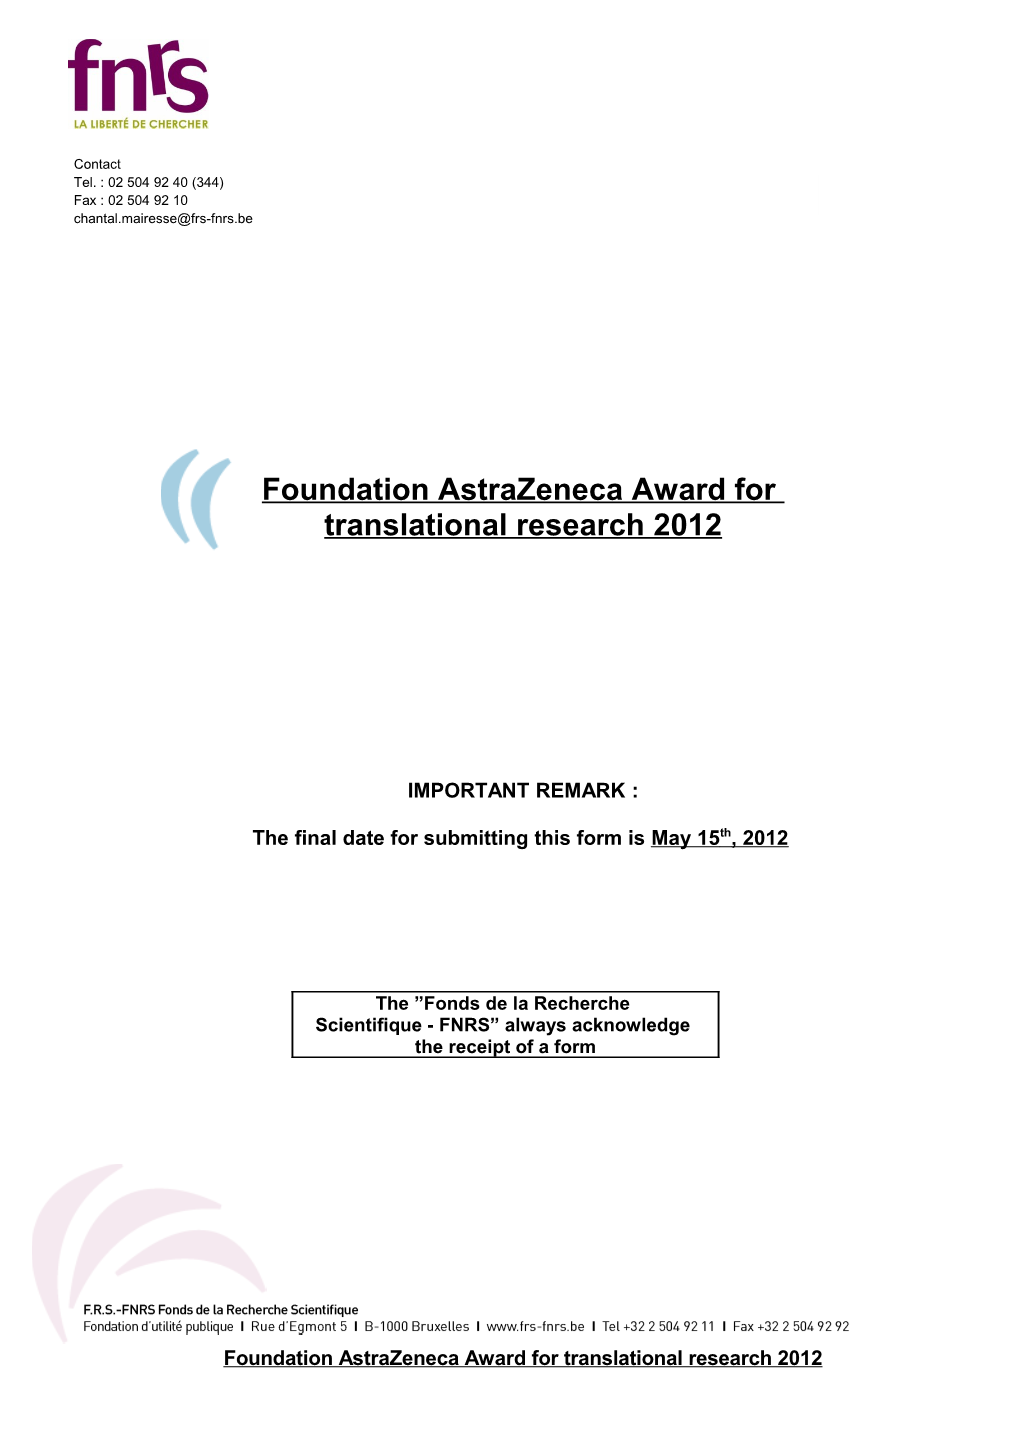 Foundation Astrazeneca Award for Translational Research 2012